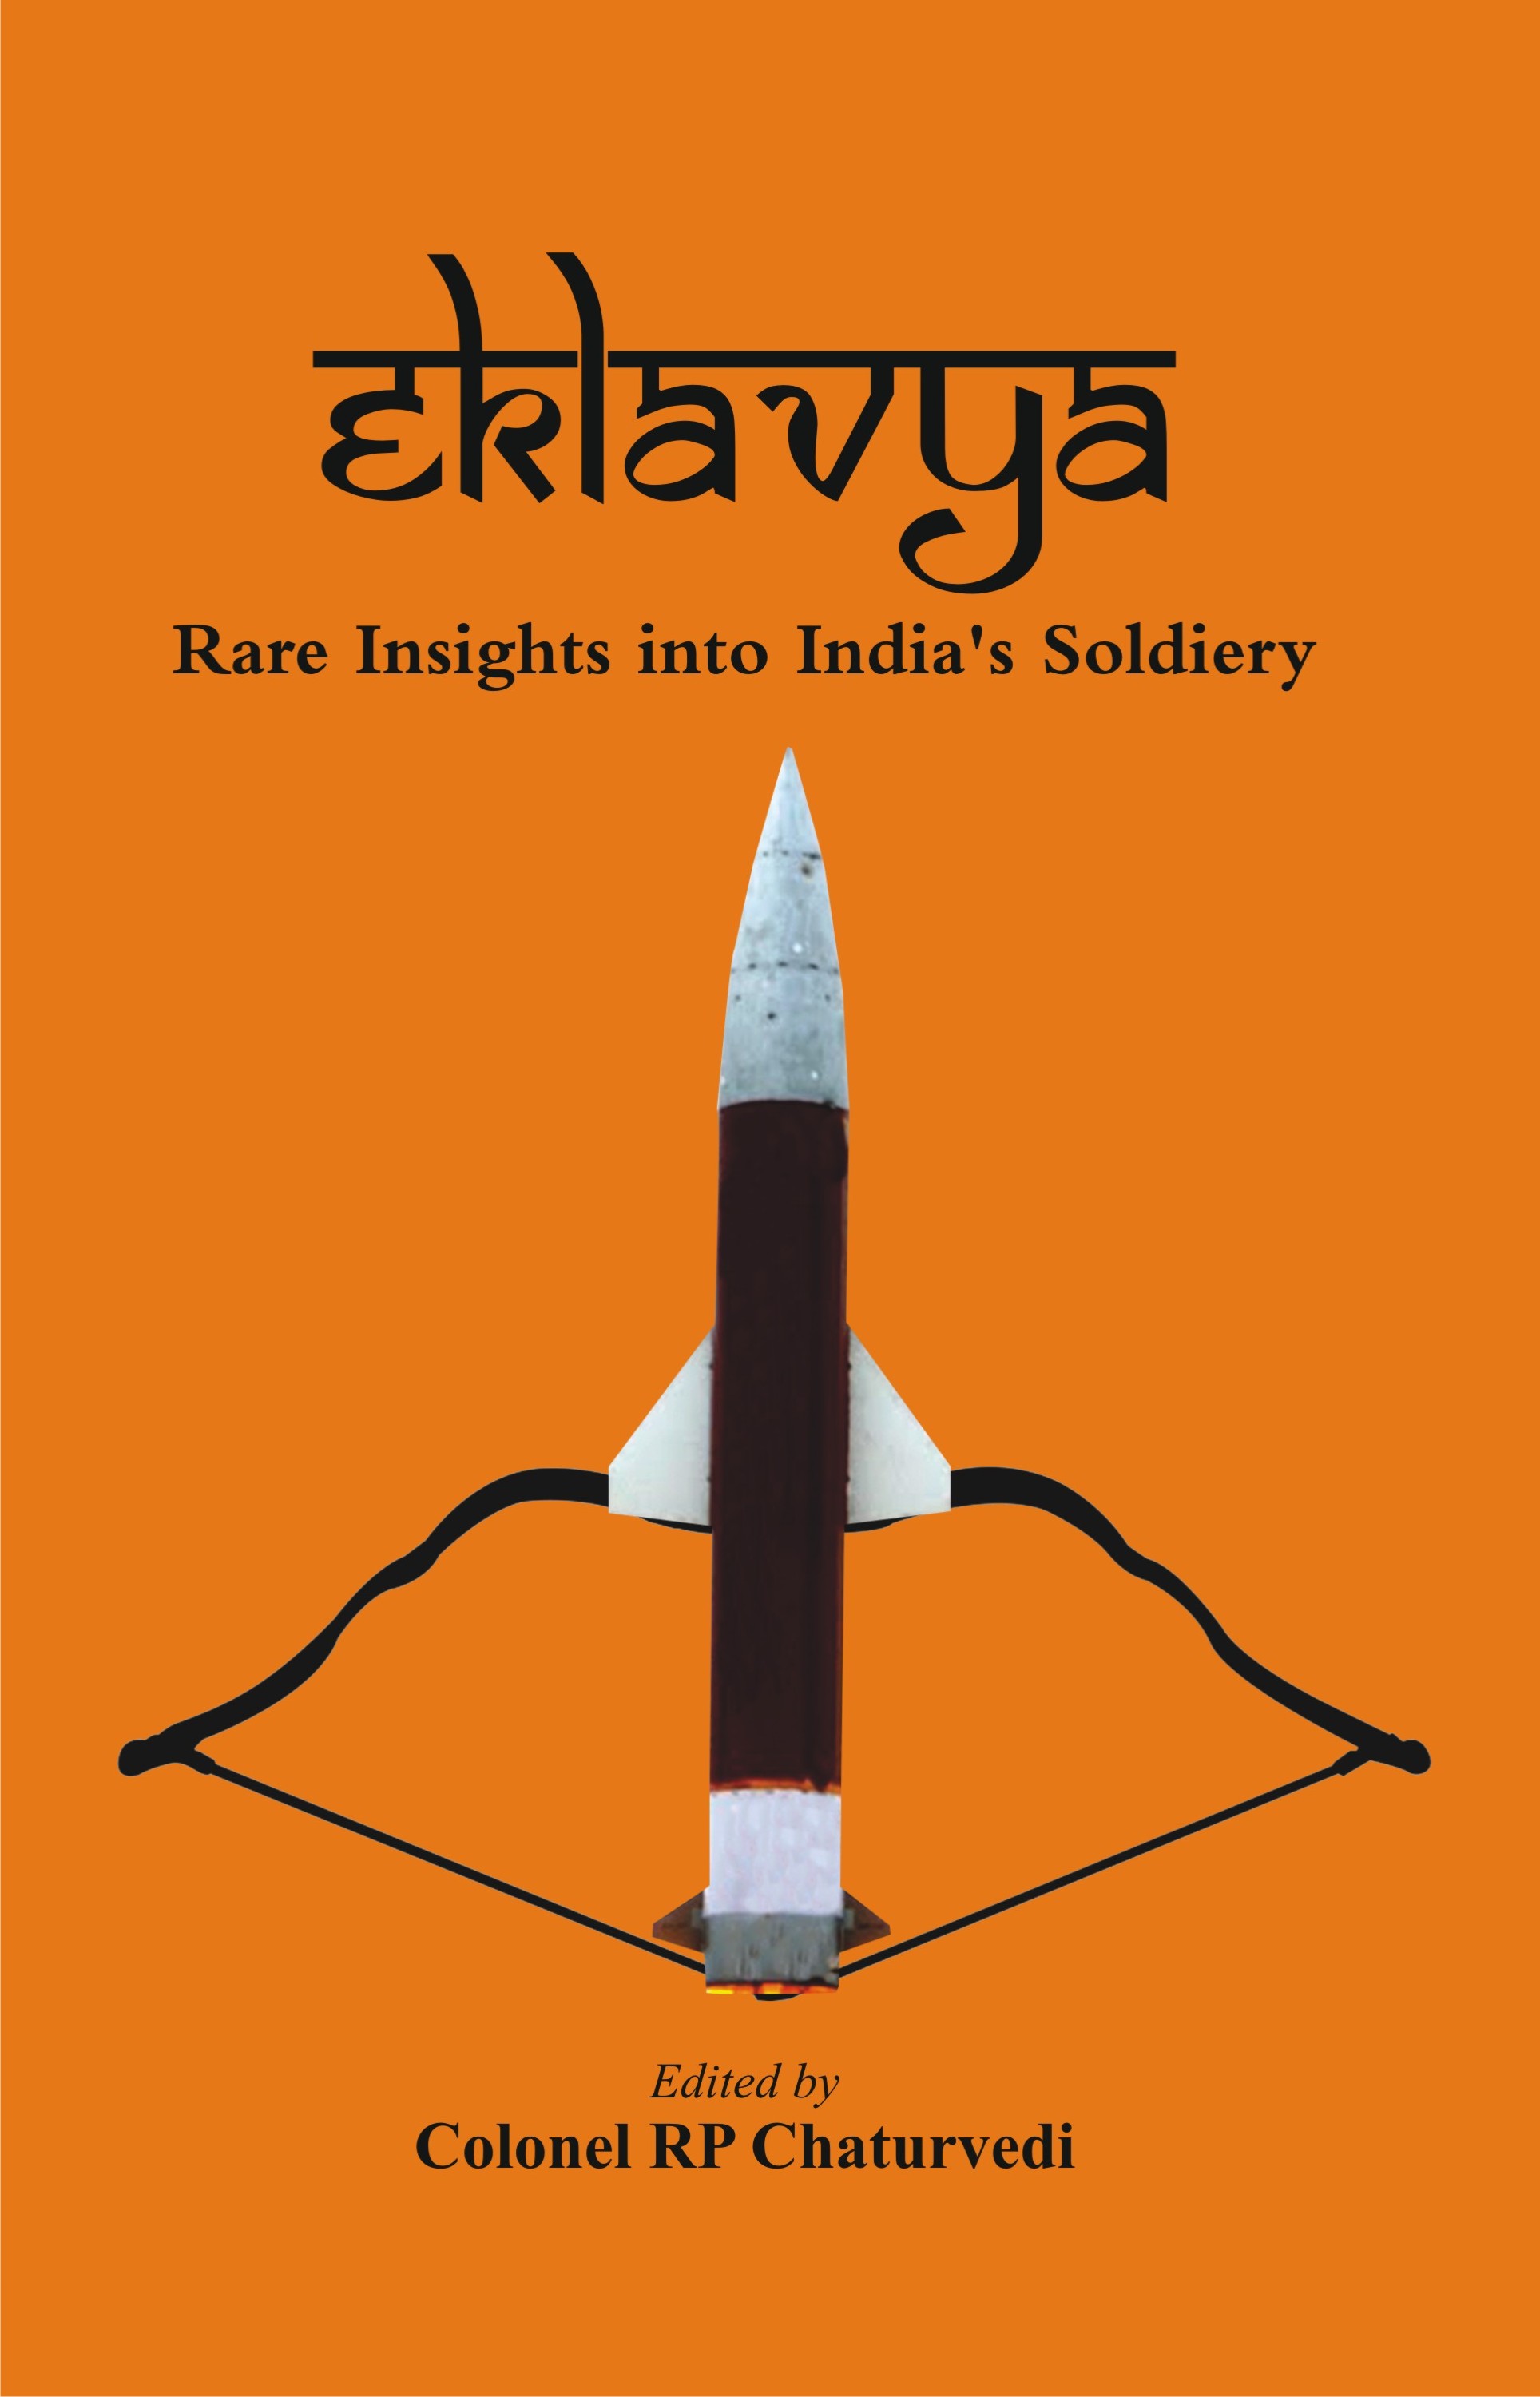 EKLAVYA : Rare Insights into India’s Soldiery